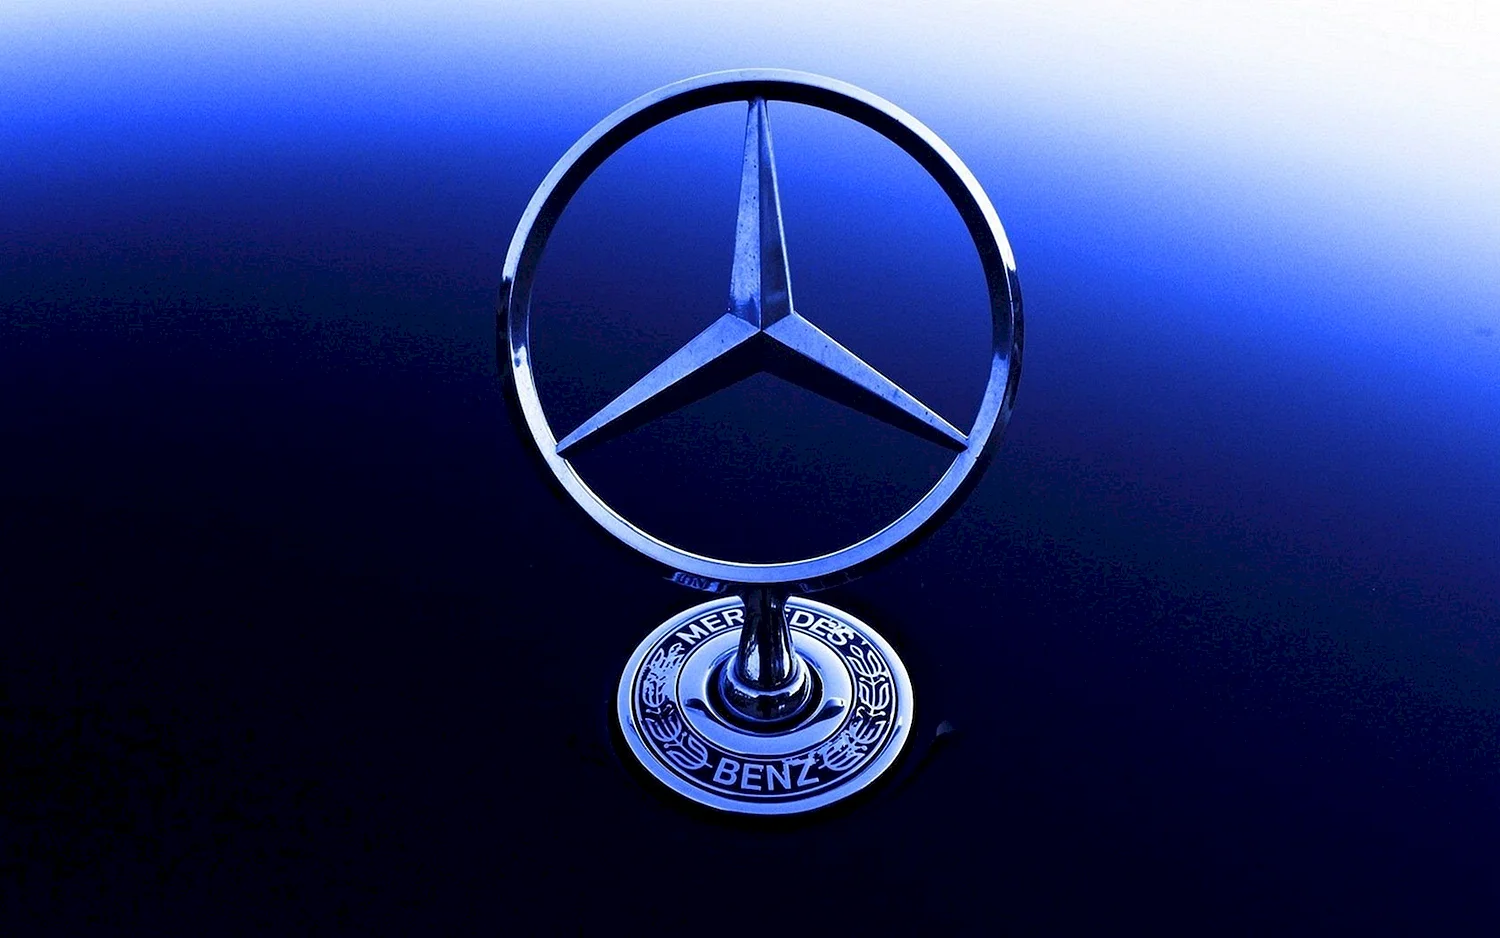 Мерседес- Бенц/ Mercedes-Benz лого